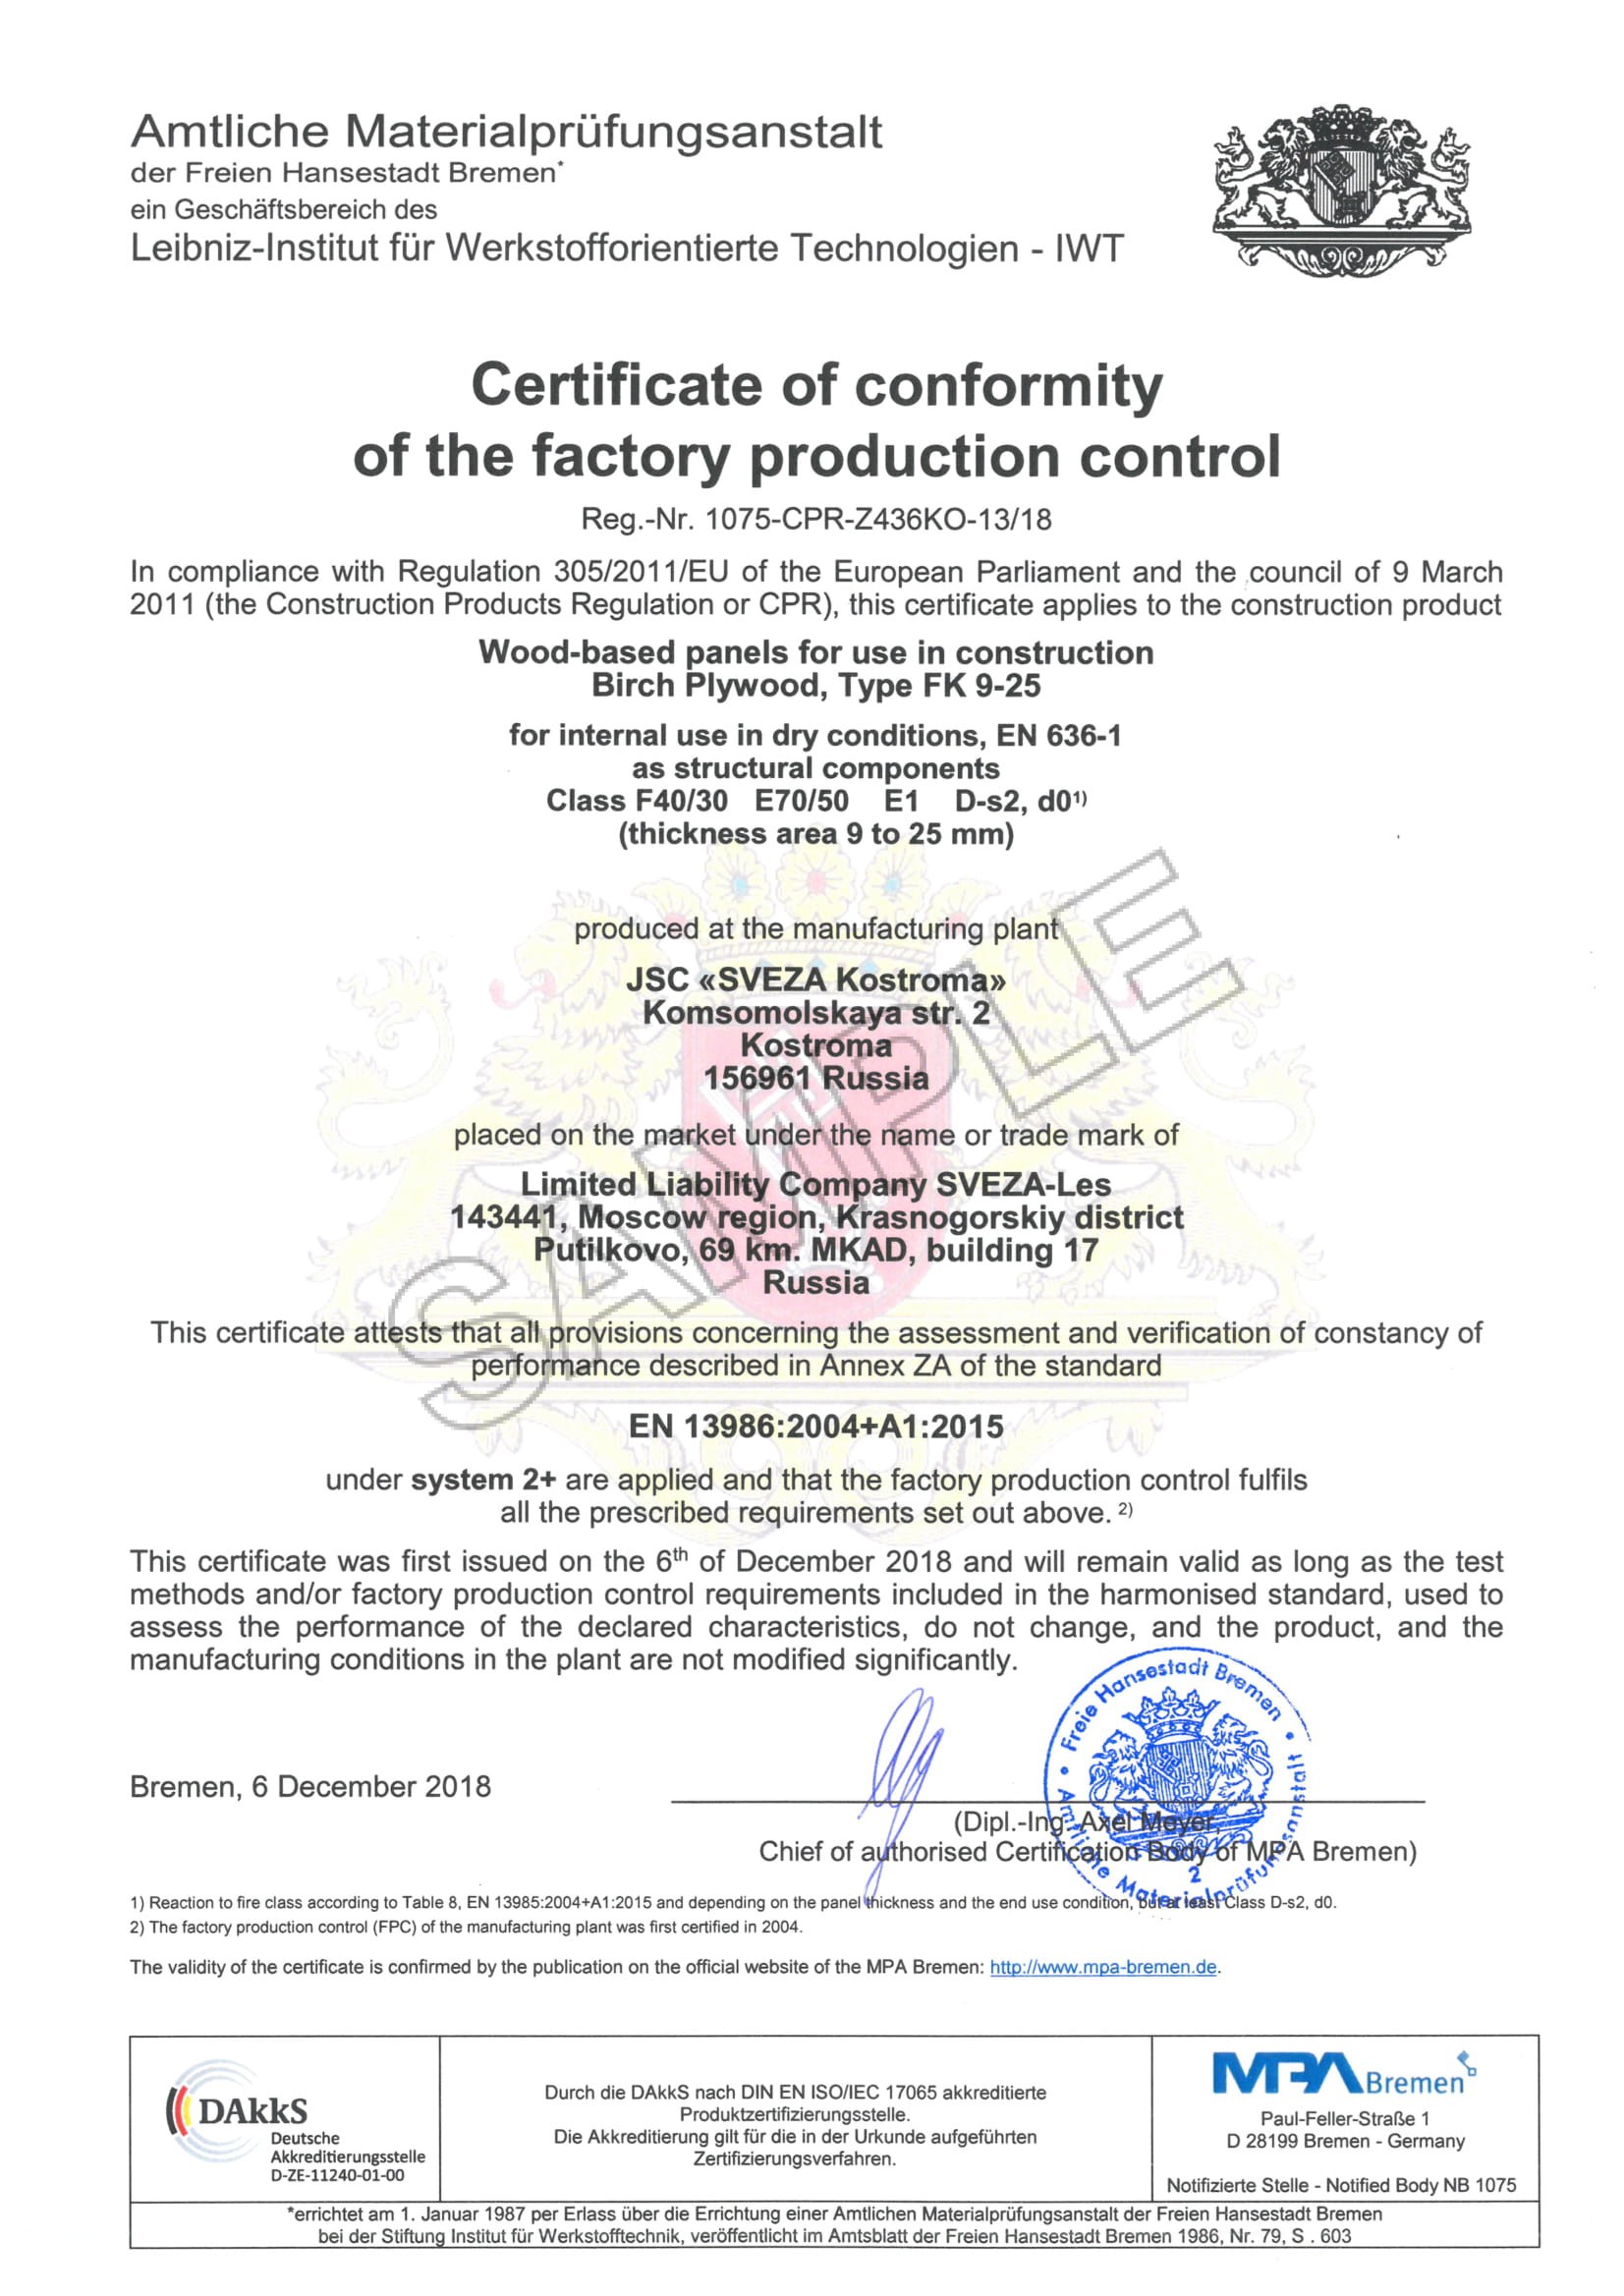 Certificate of conformity (MR, interior)-1